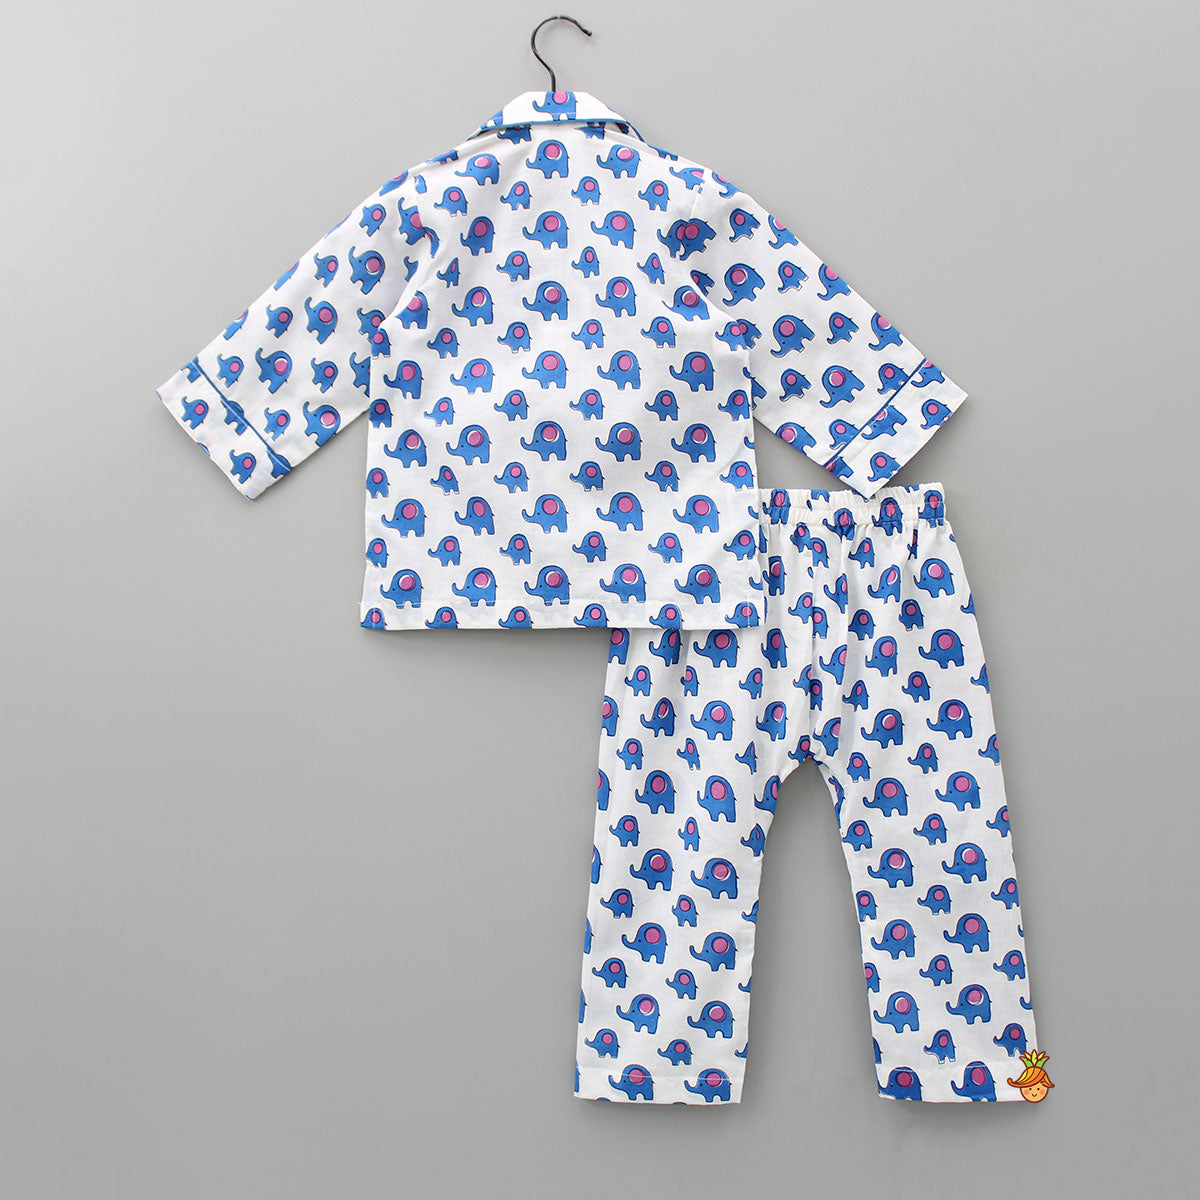 Elephant Printed Blue And White Sleepwear